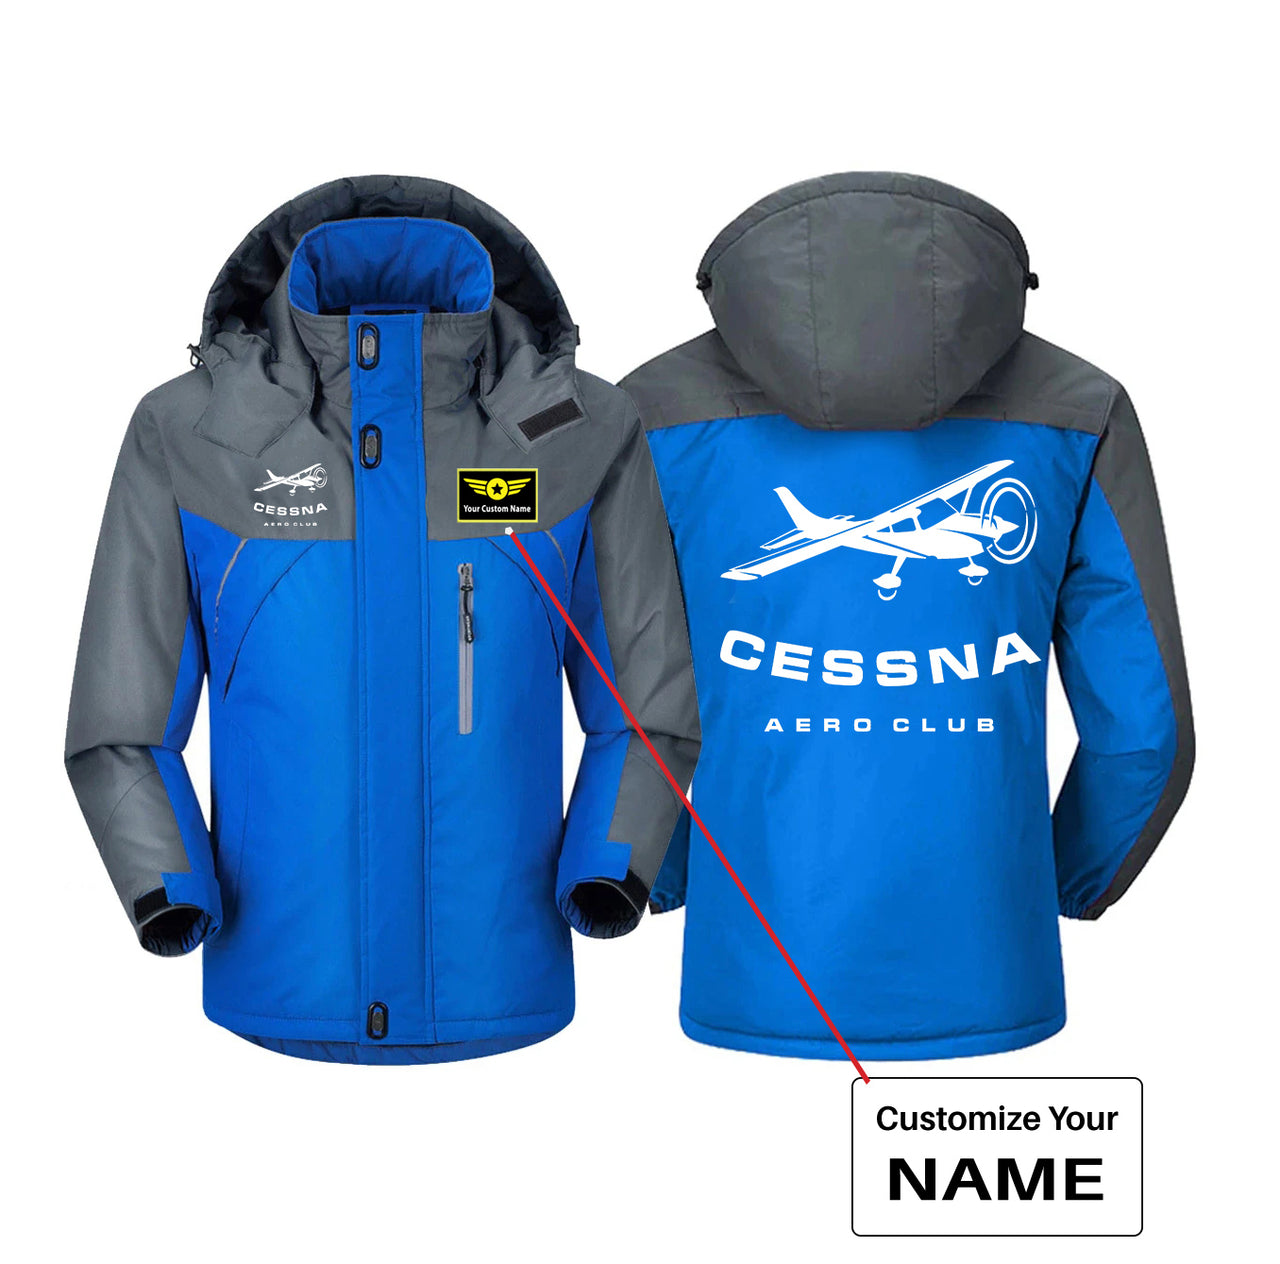 Cessna Aeroclub Designed Thick Winter Jackets